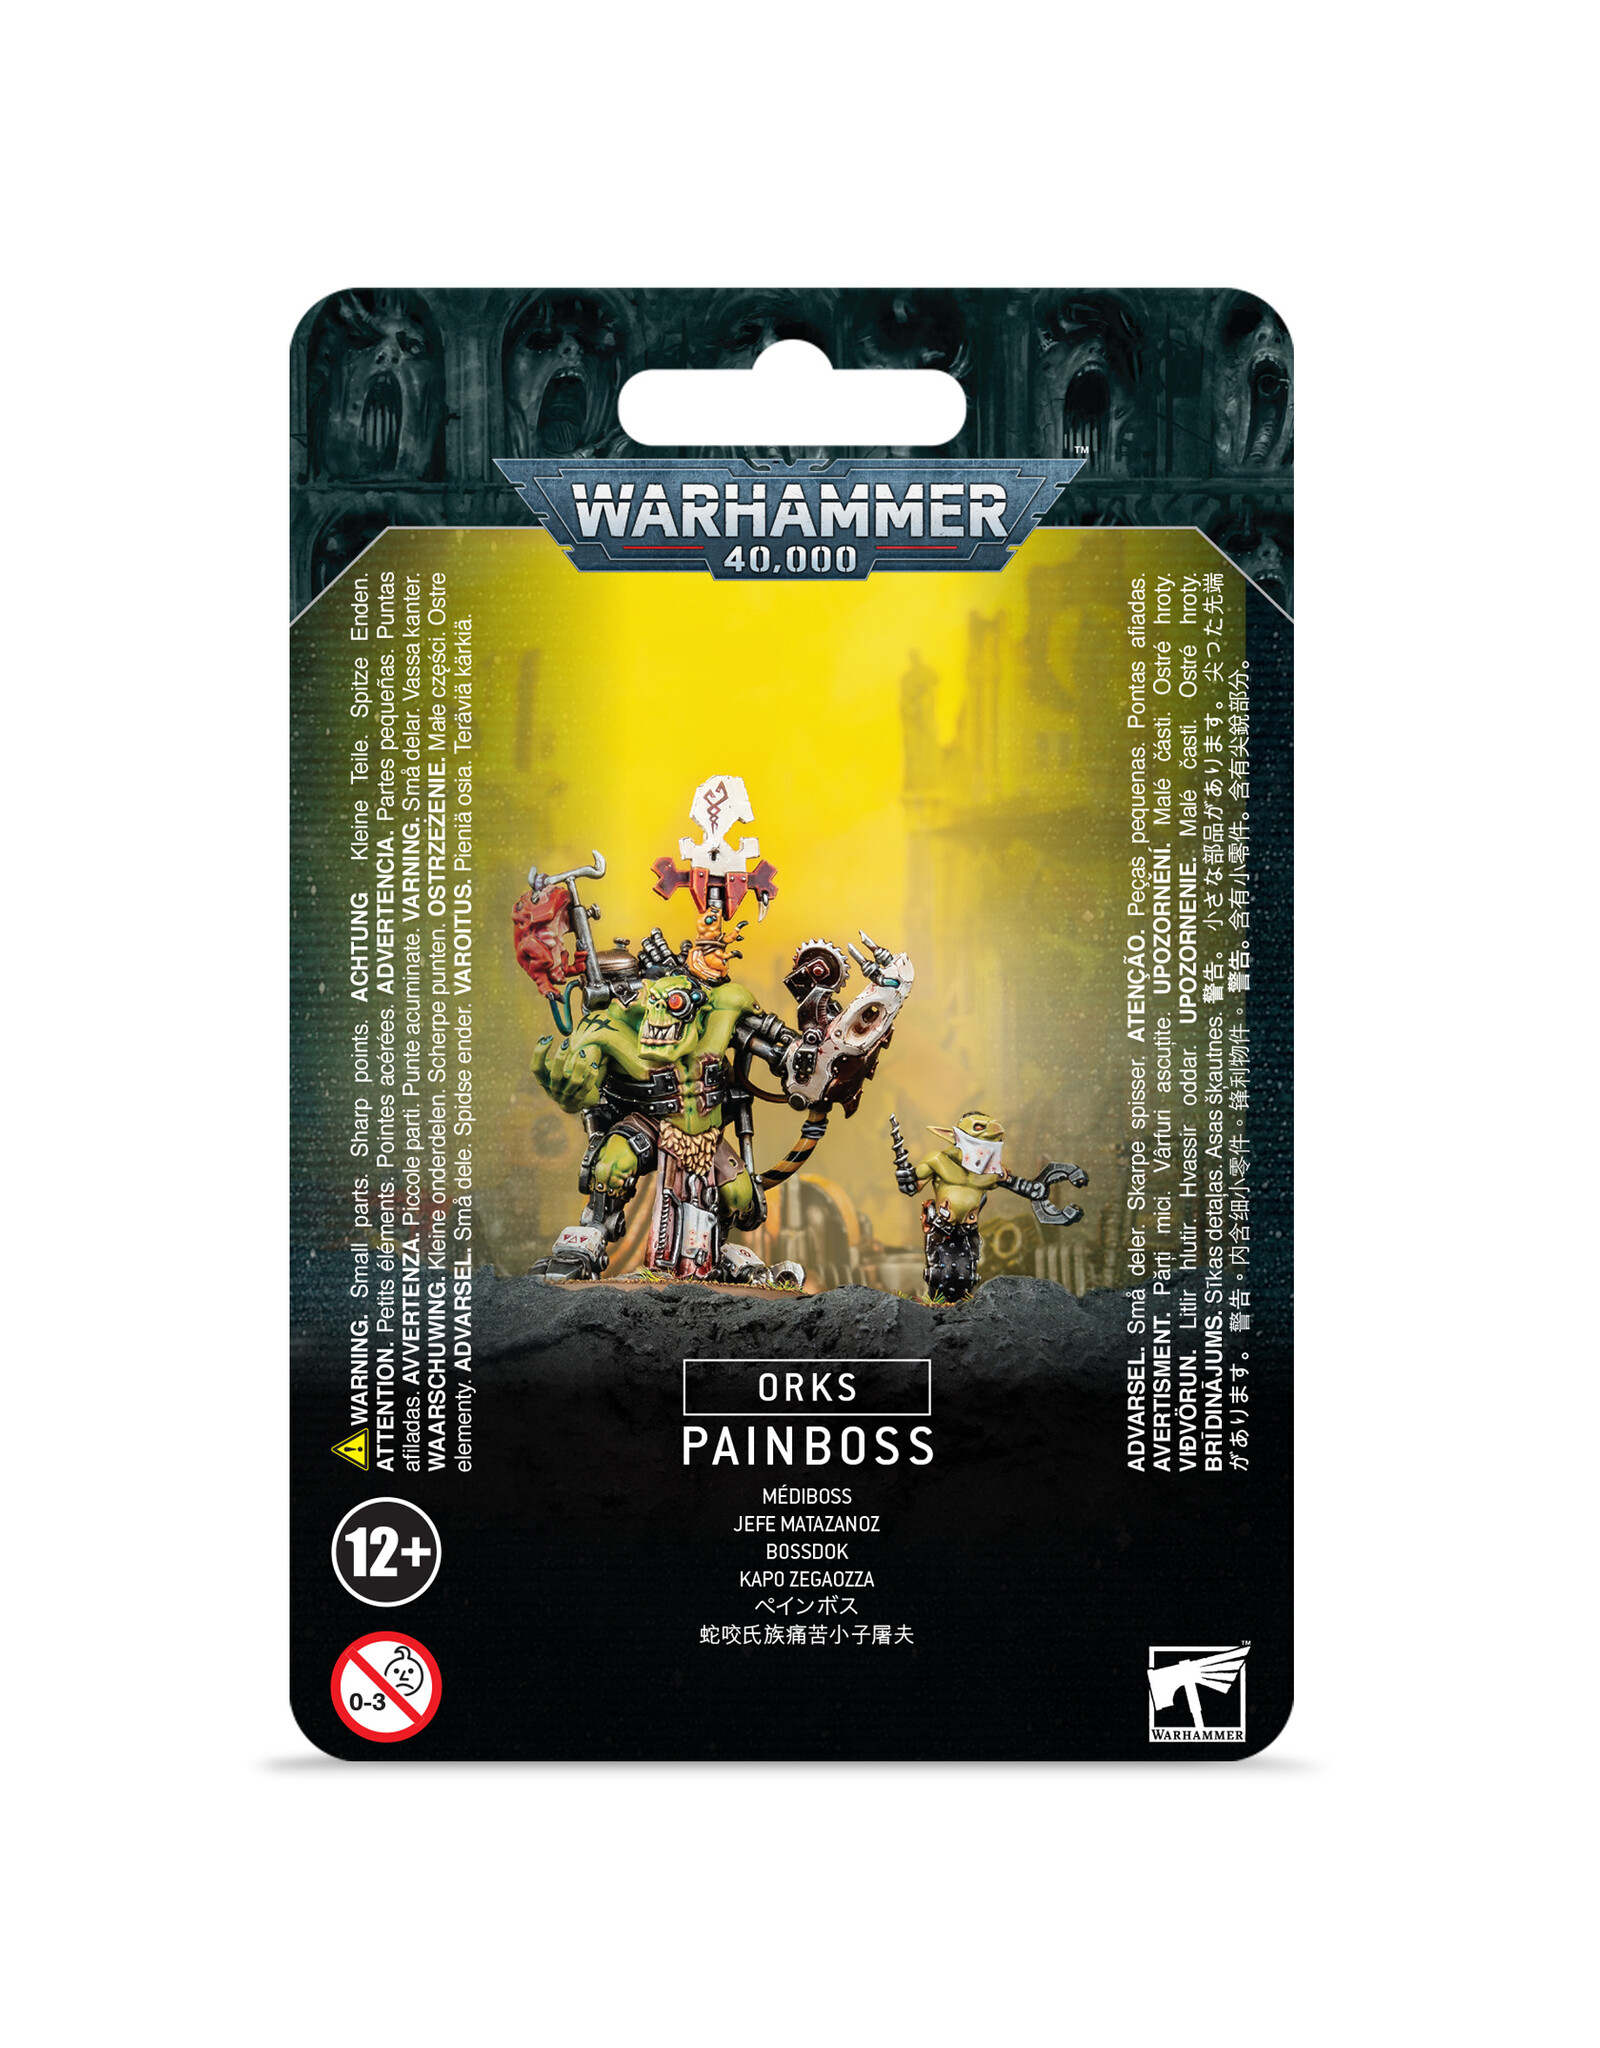 Warhammer 40K Orks: Painboss